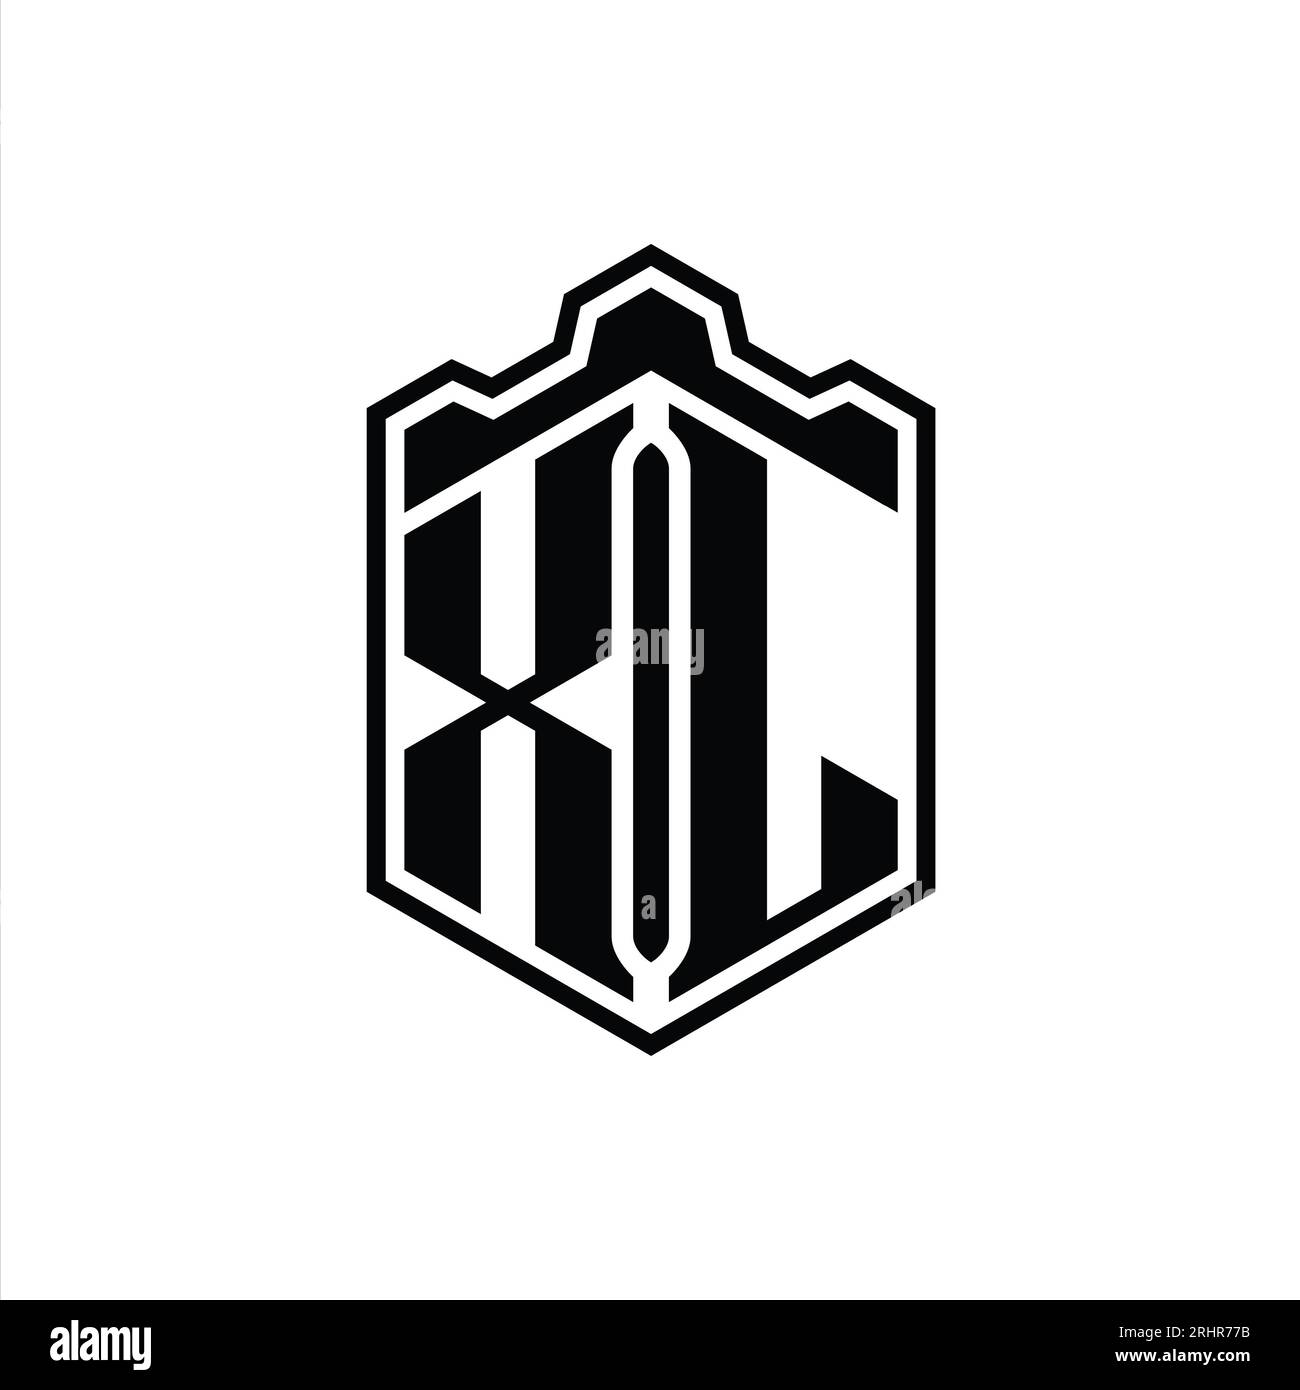 XL Letter Logo monogram hexagon shield shape crown castle geometric with outline style design template Stock Photo